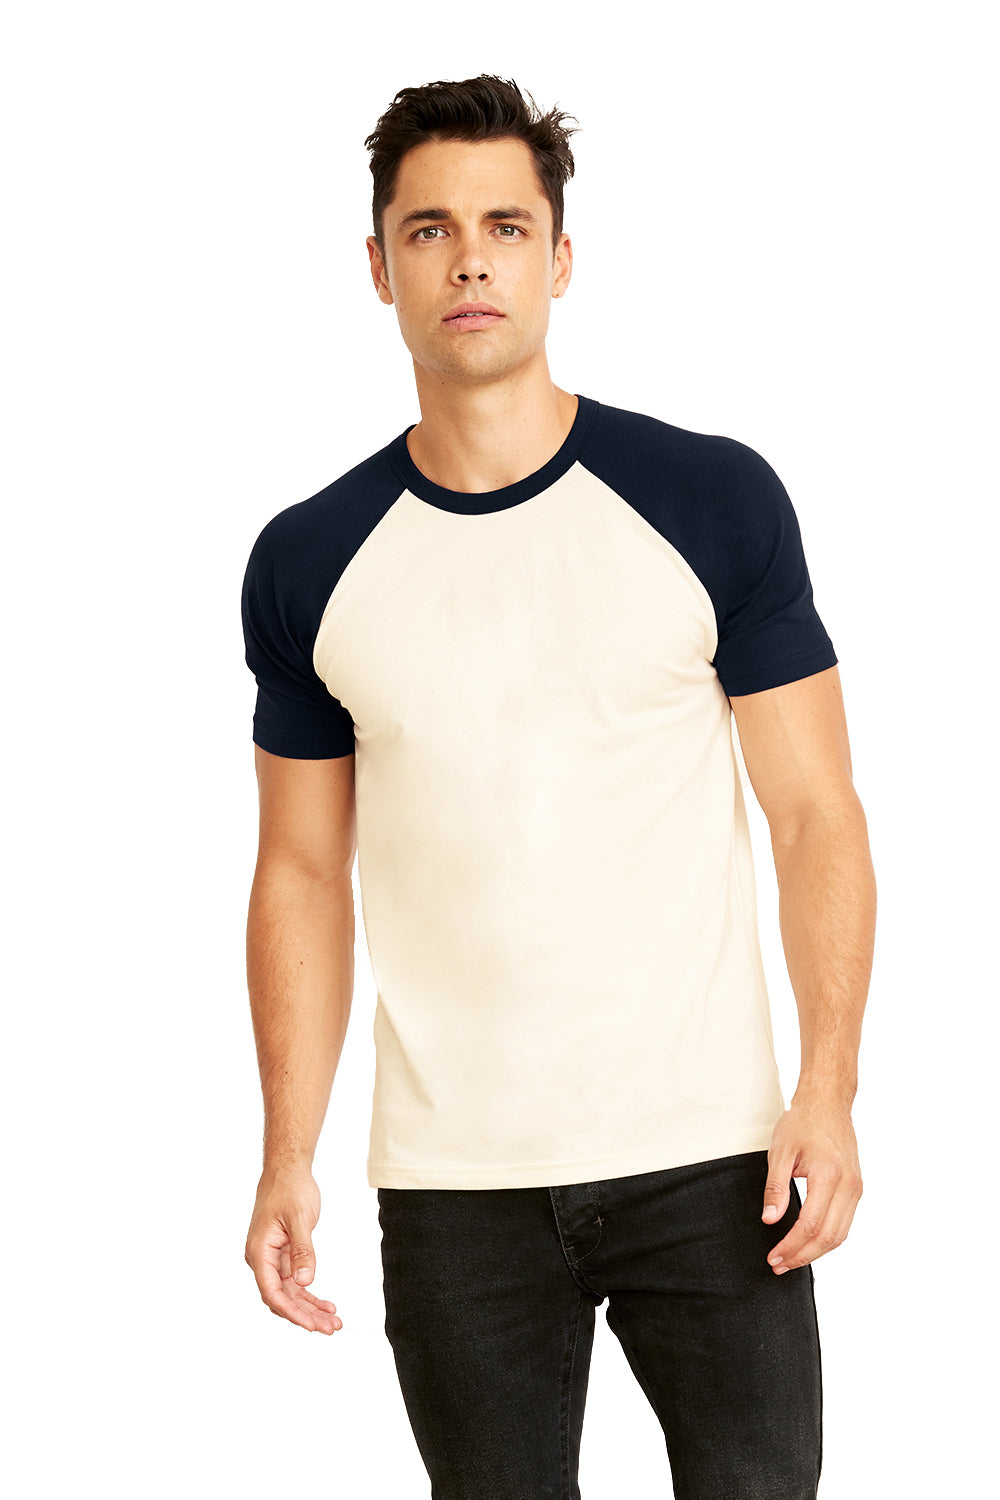 Next Level N3650 Mens Fine Jersey Short Sleeve Crewneck T-Shirt Navy Blue/Natural Front